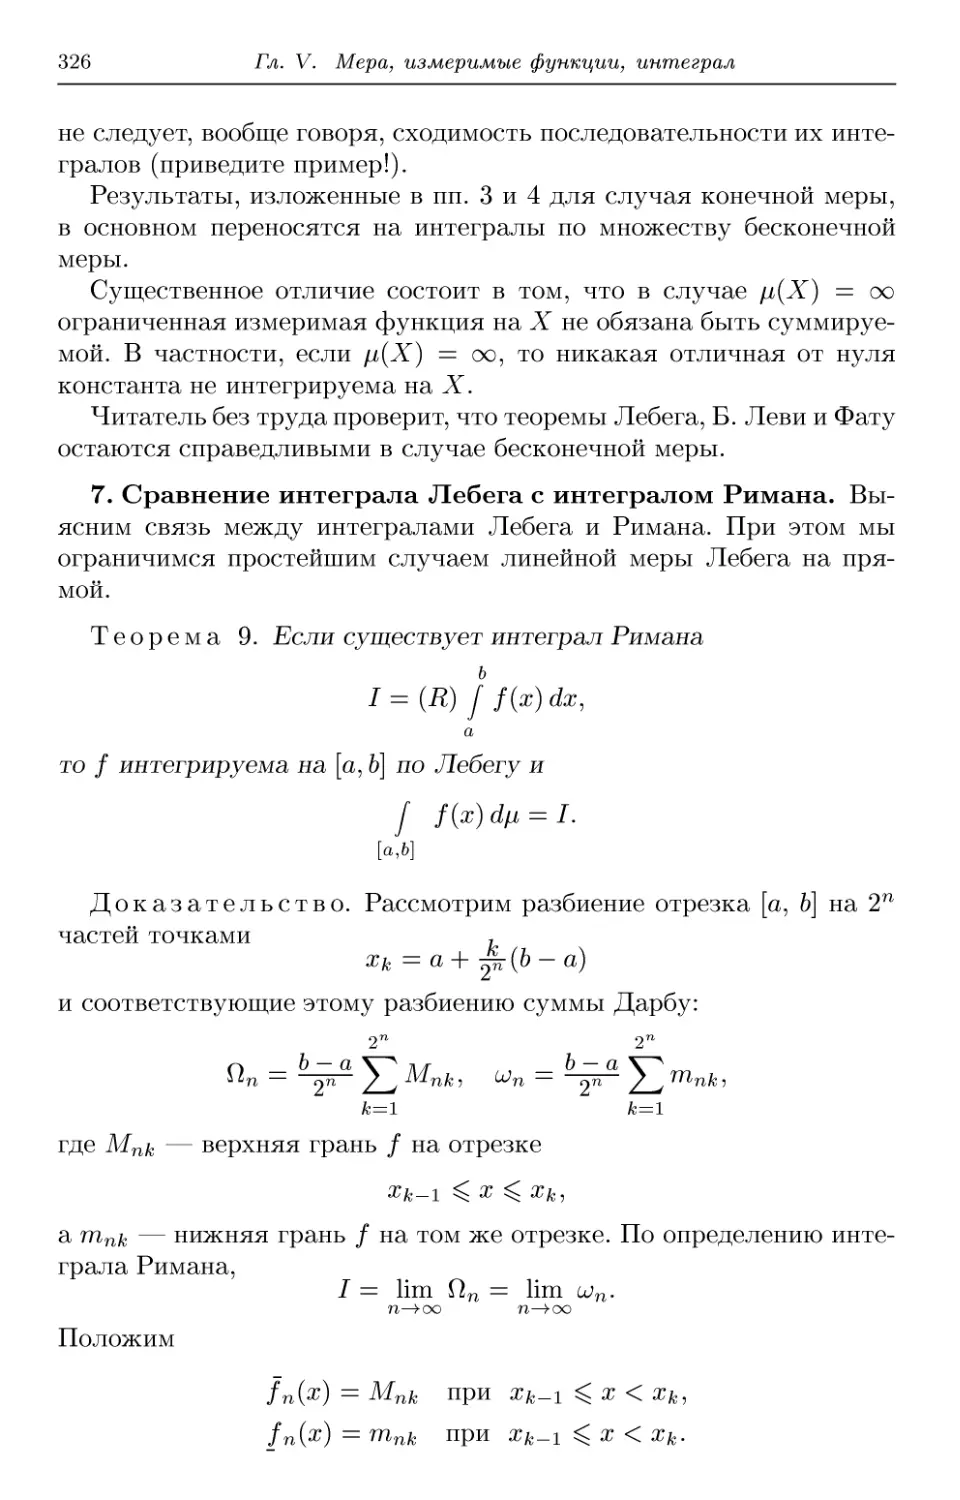 7. Сравнение интеграла Лебега с интегралом Римана